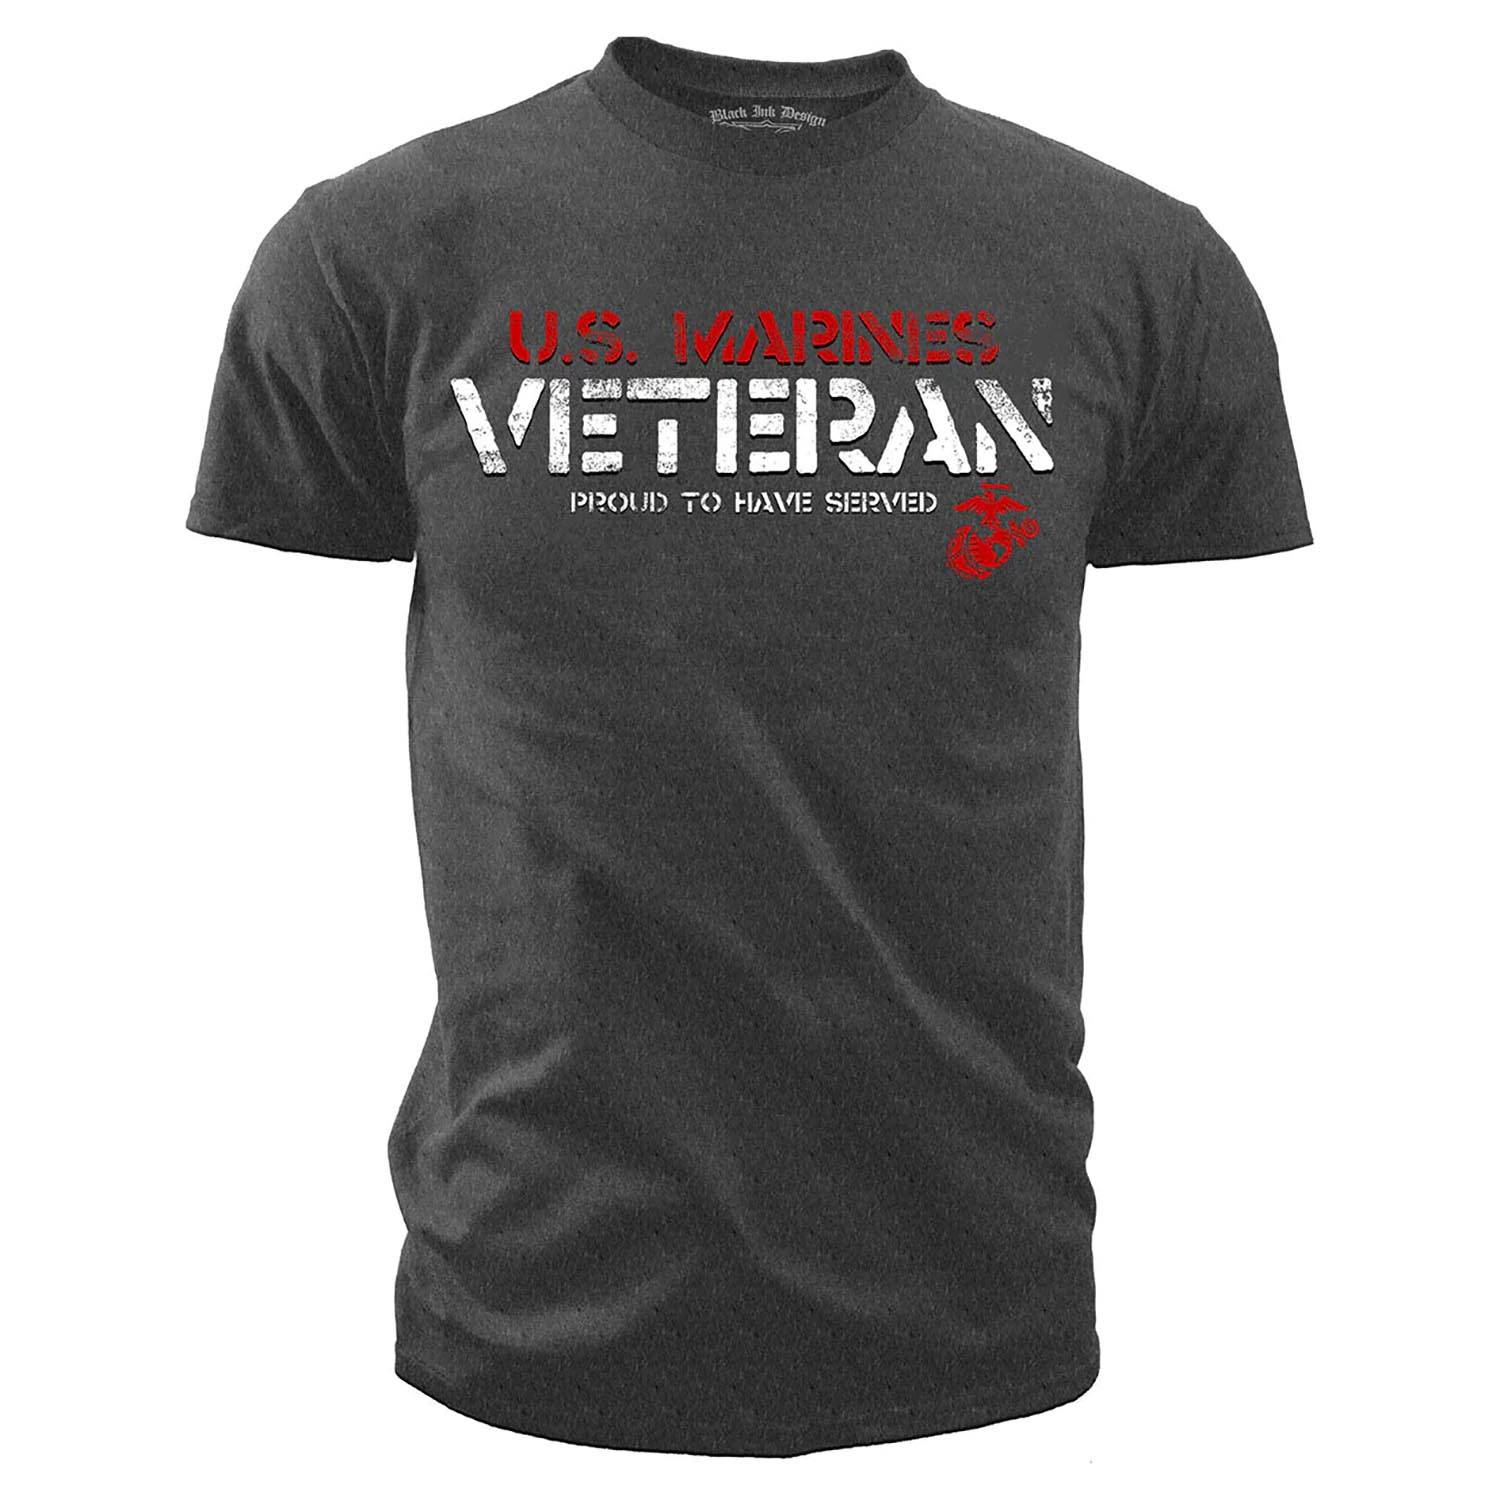 7.62 Design U.S. Marines Veteran T-Shirt